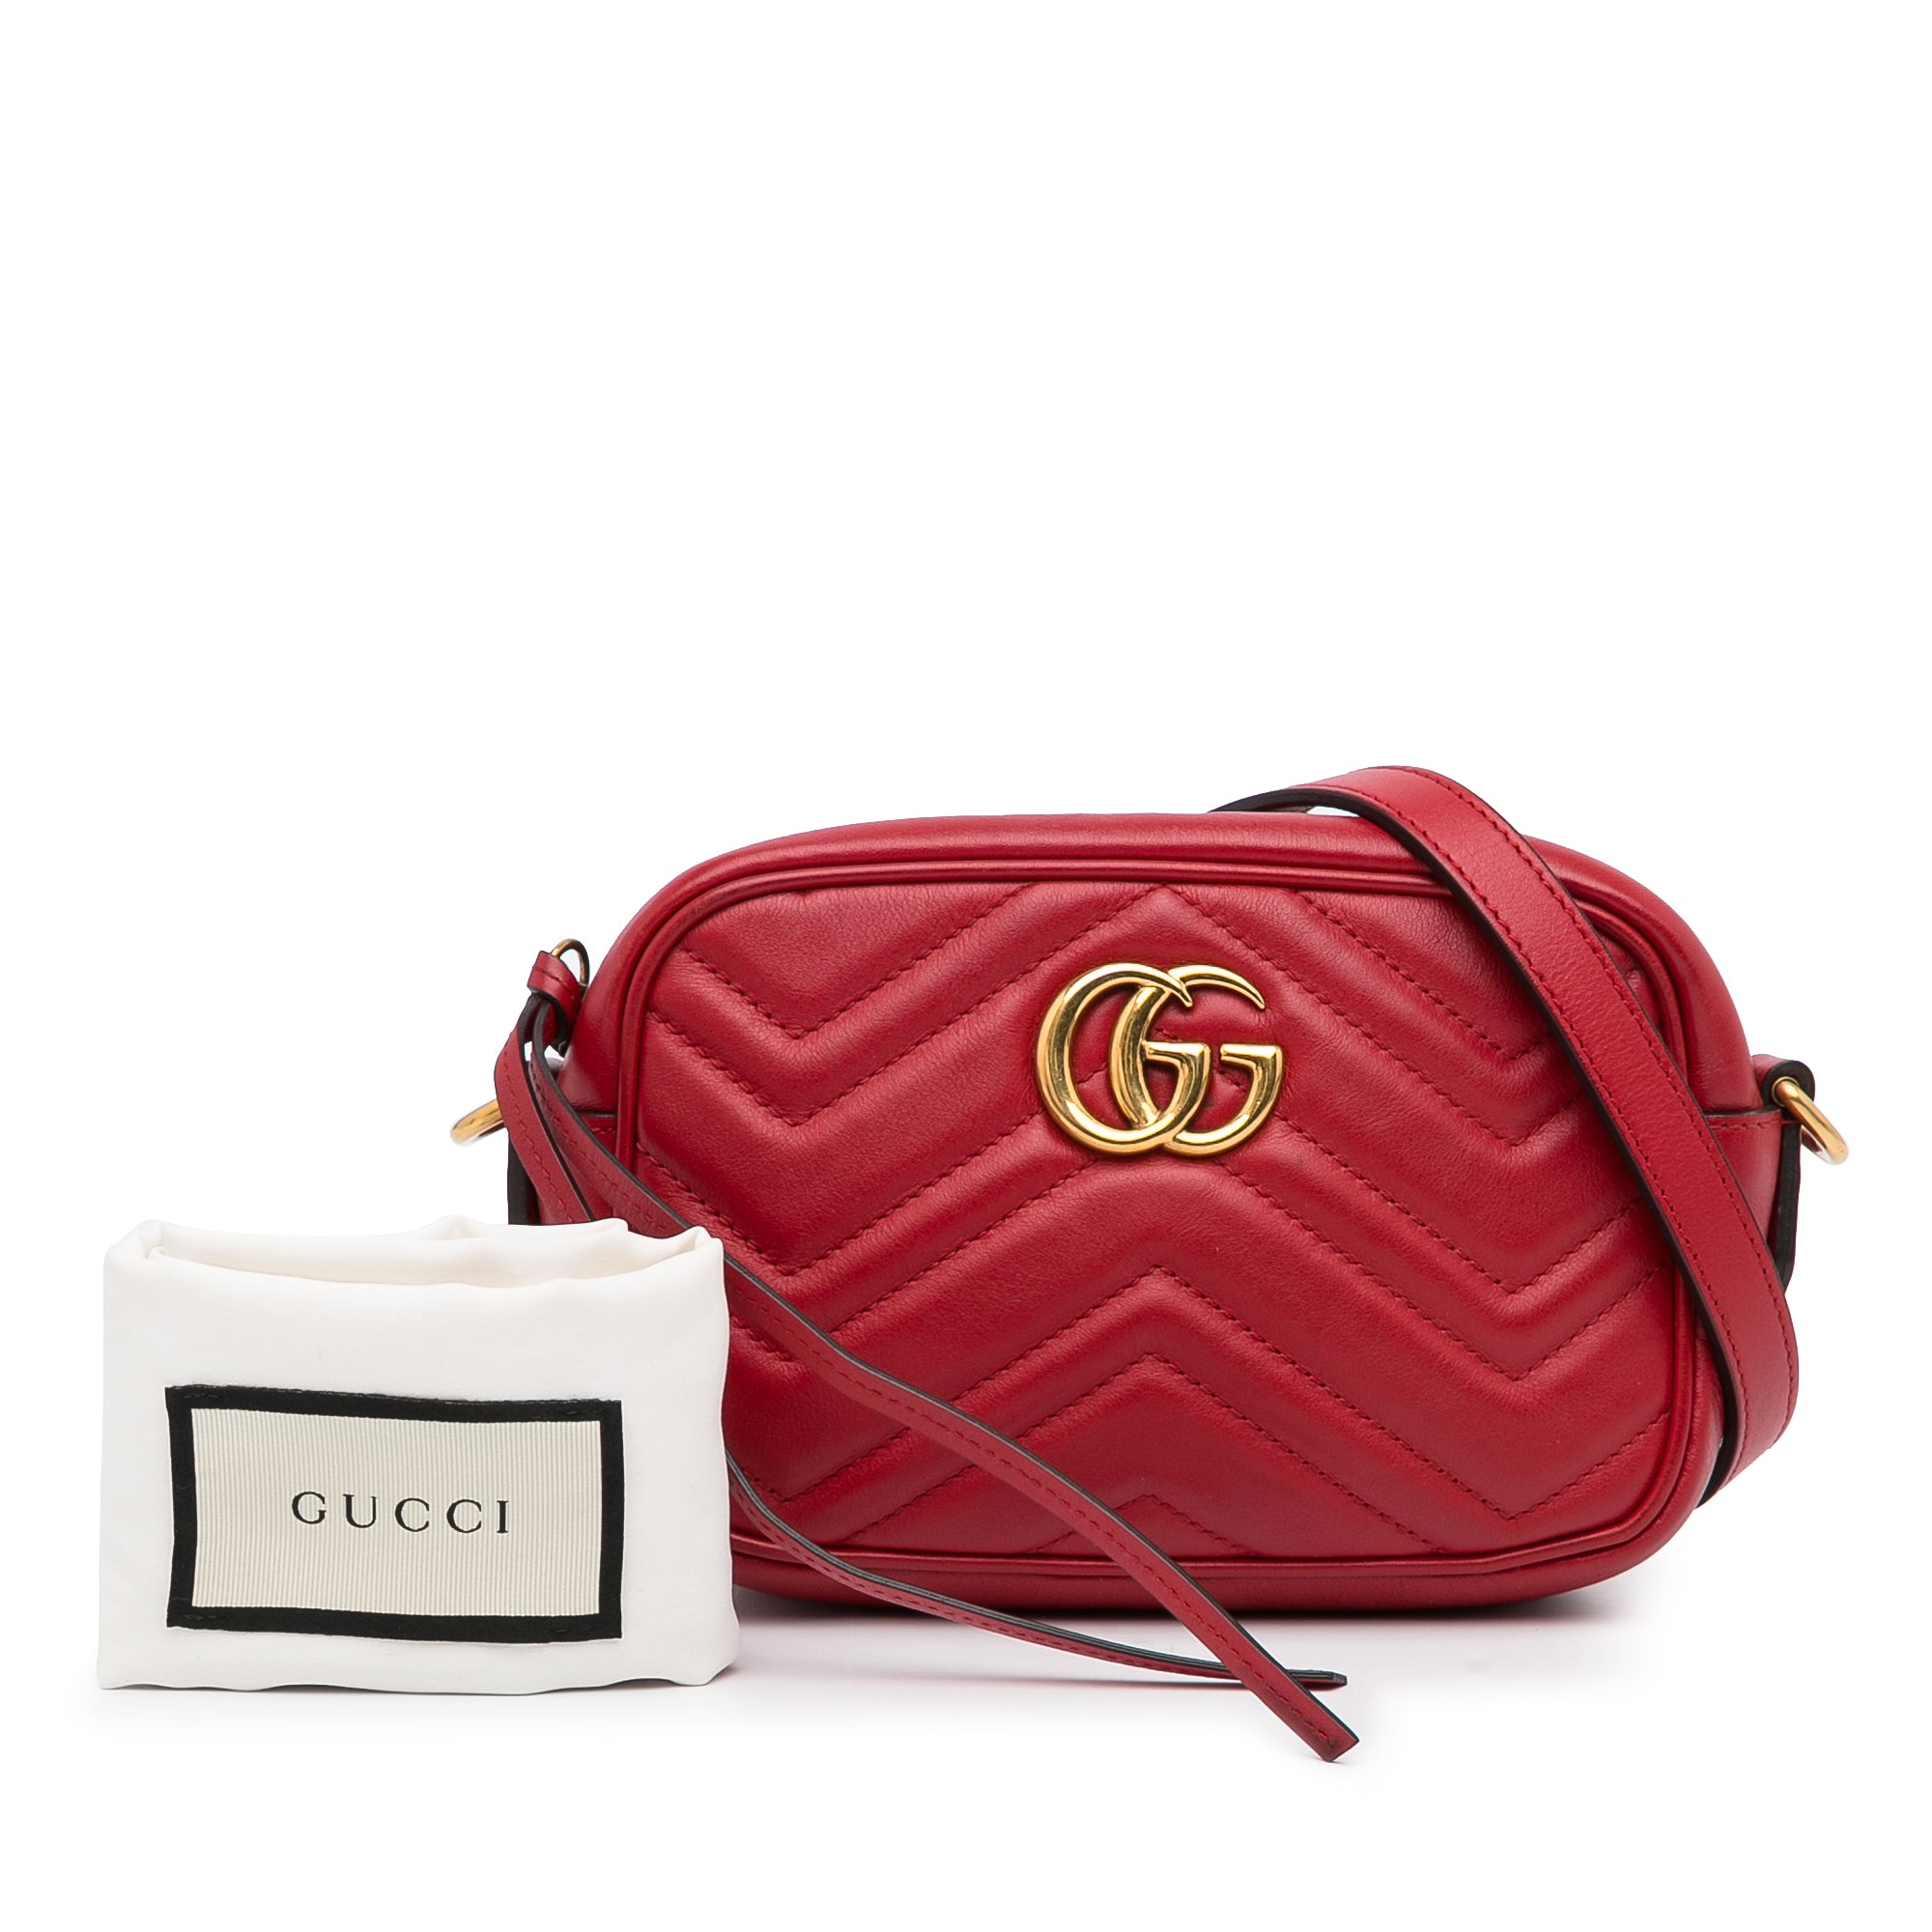 crossbody red gucci bag